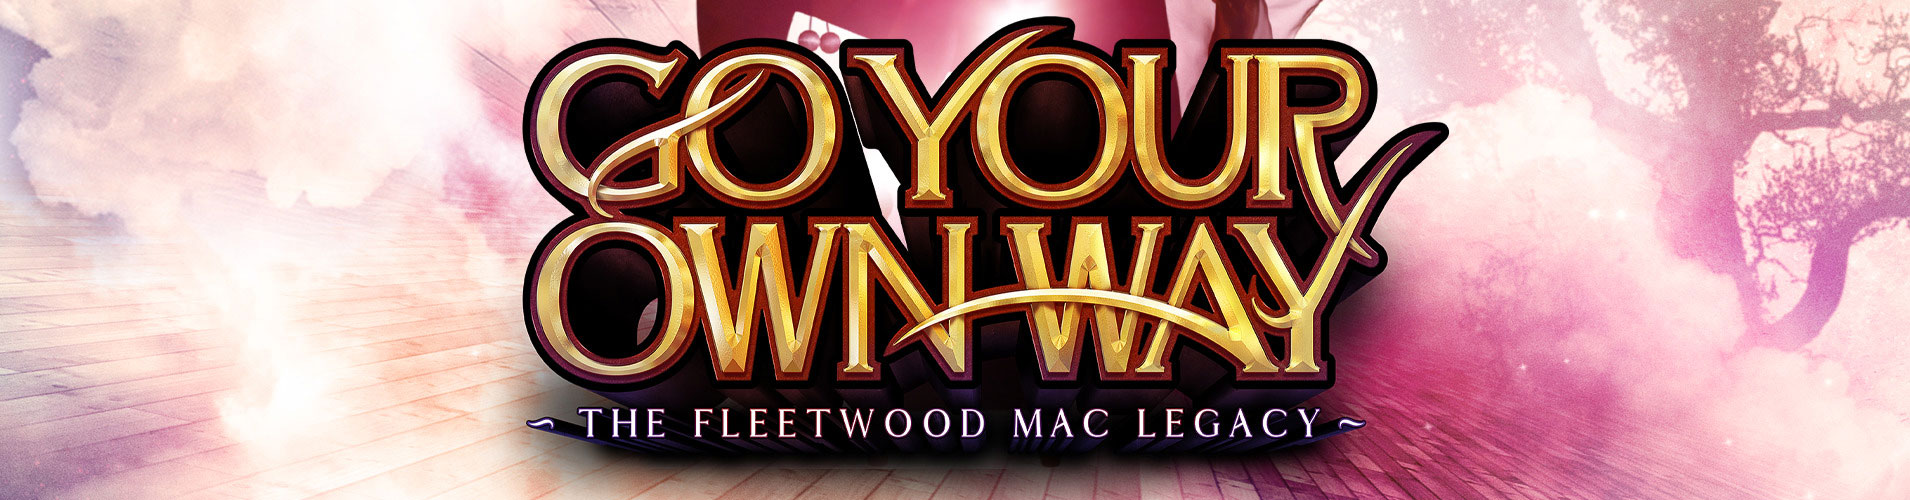 1090x500-Go-Your-Own-Way-The-Fleetwood-Mac-Legacy.jpg